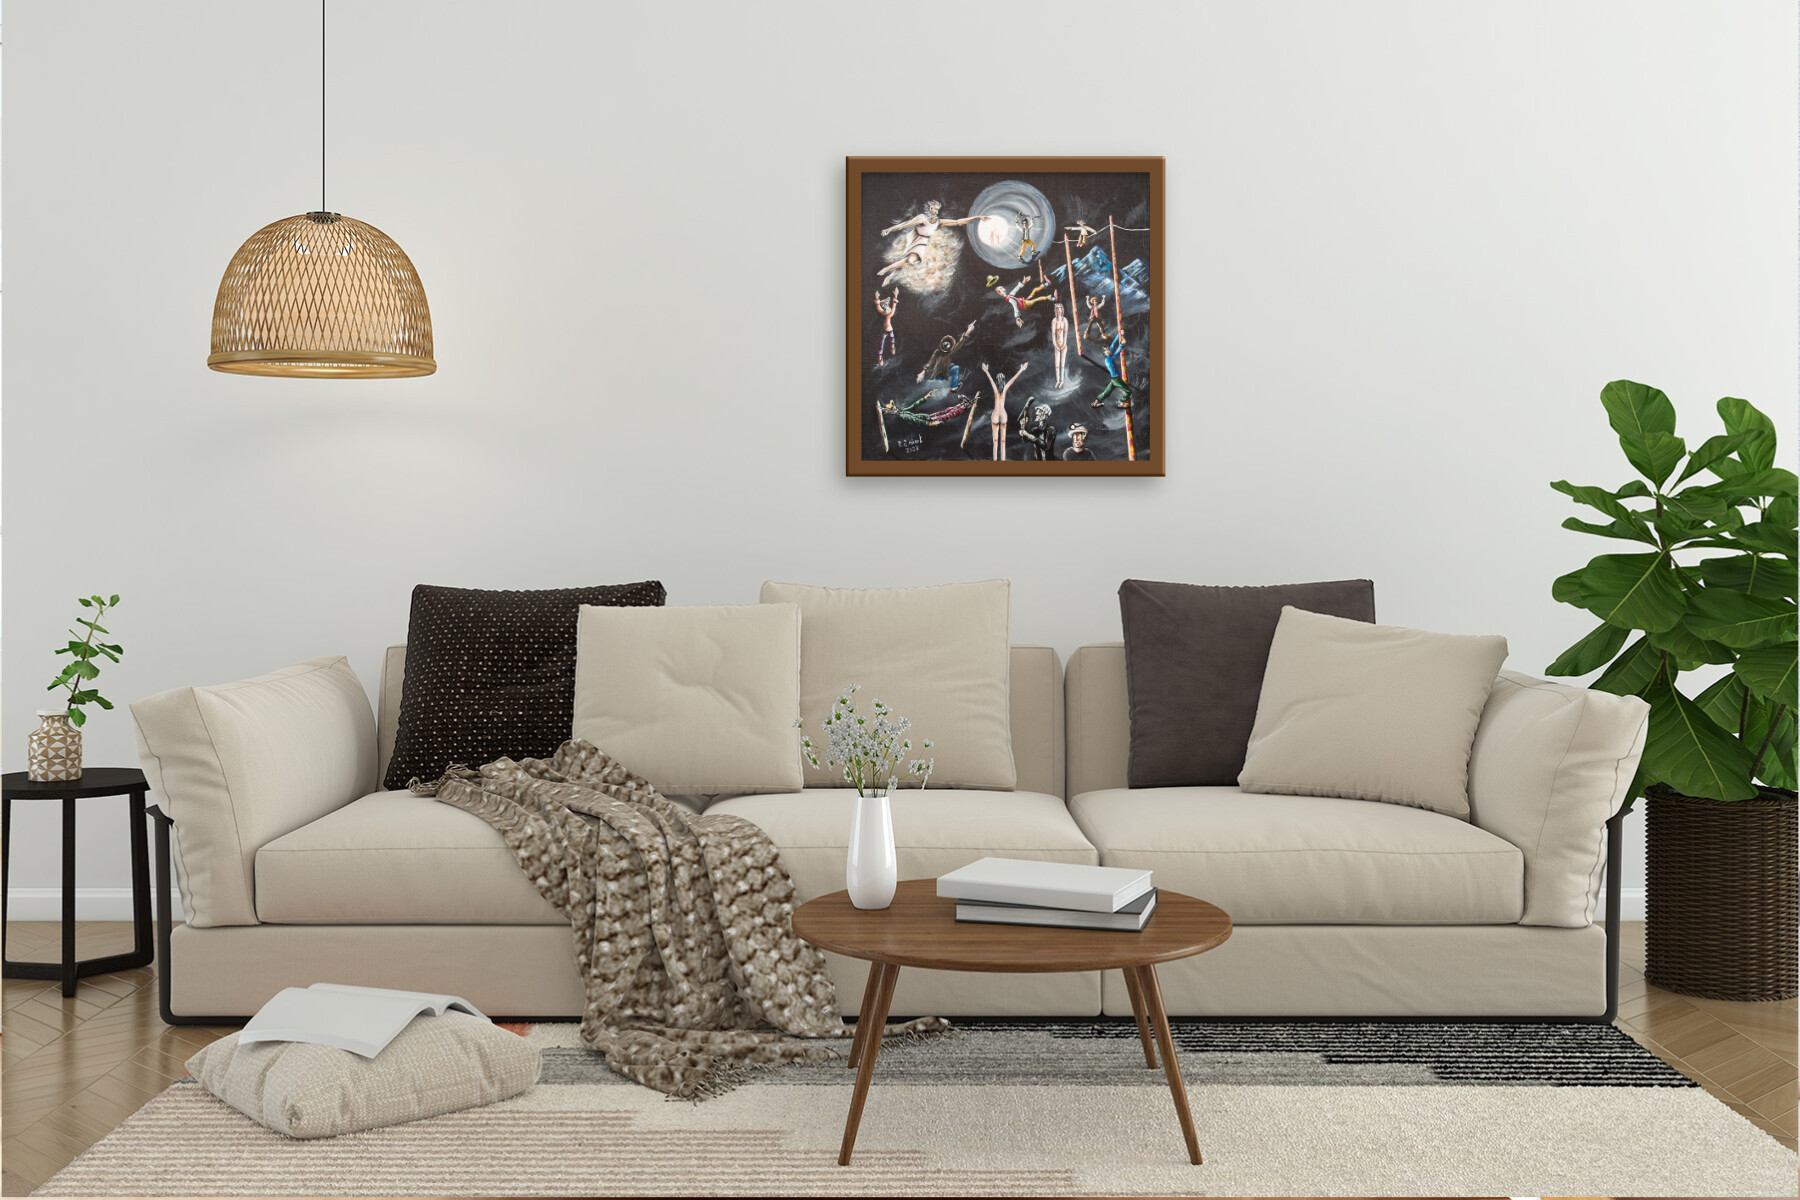 Mid-century modern living room interior design with monstera tre